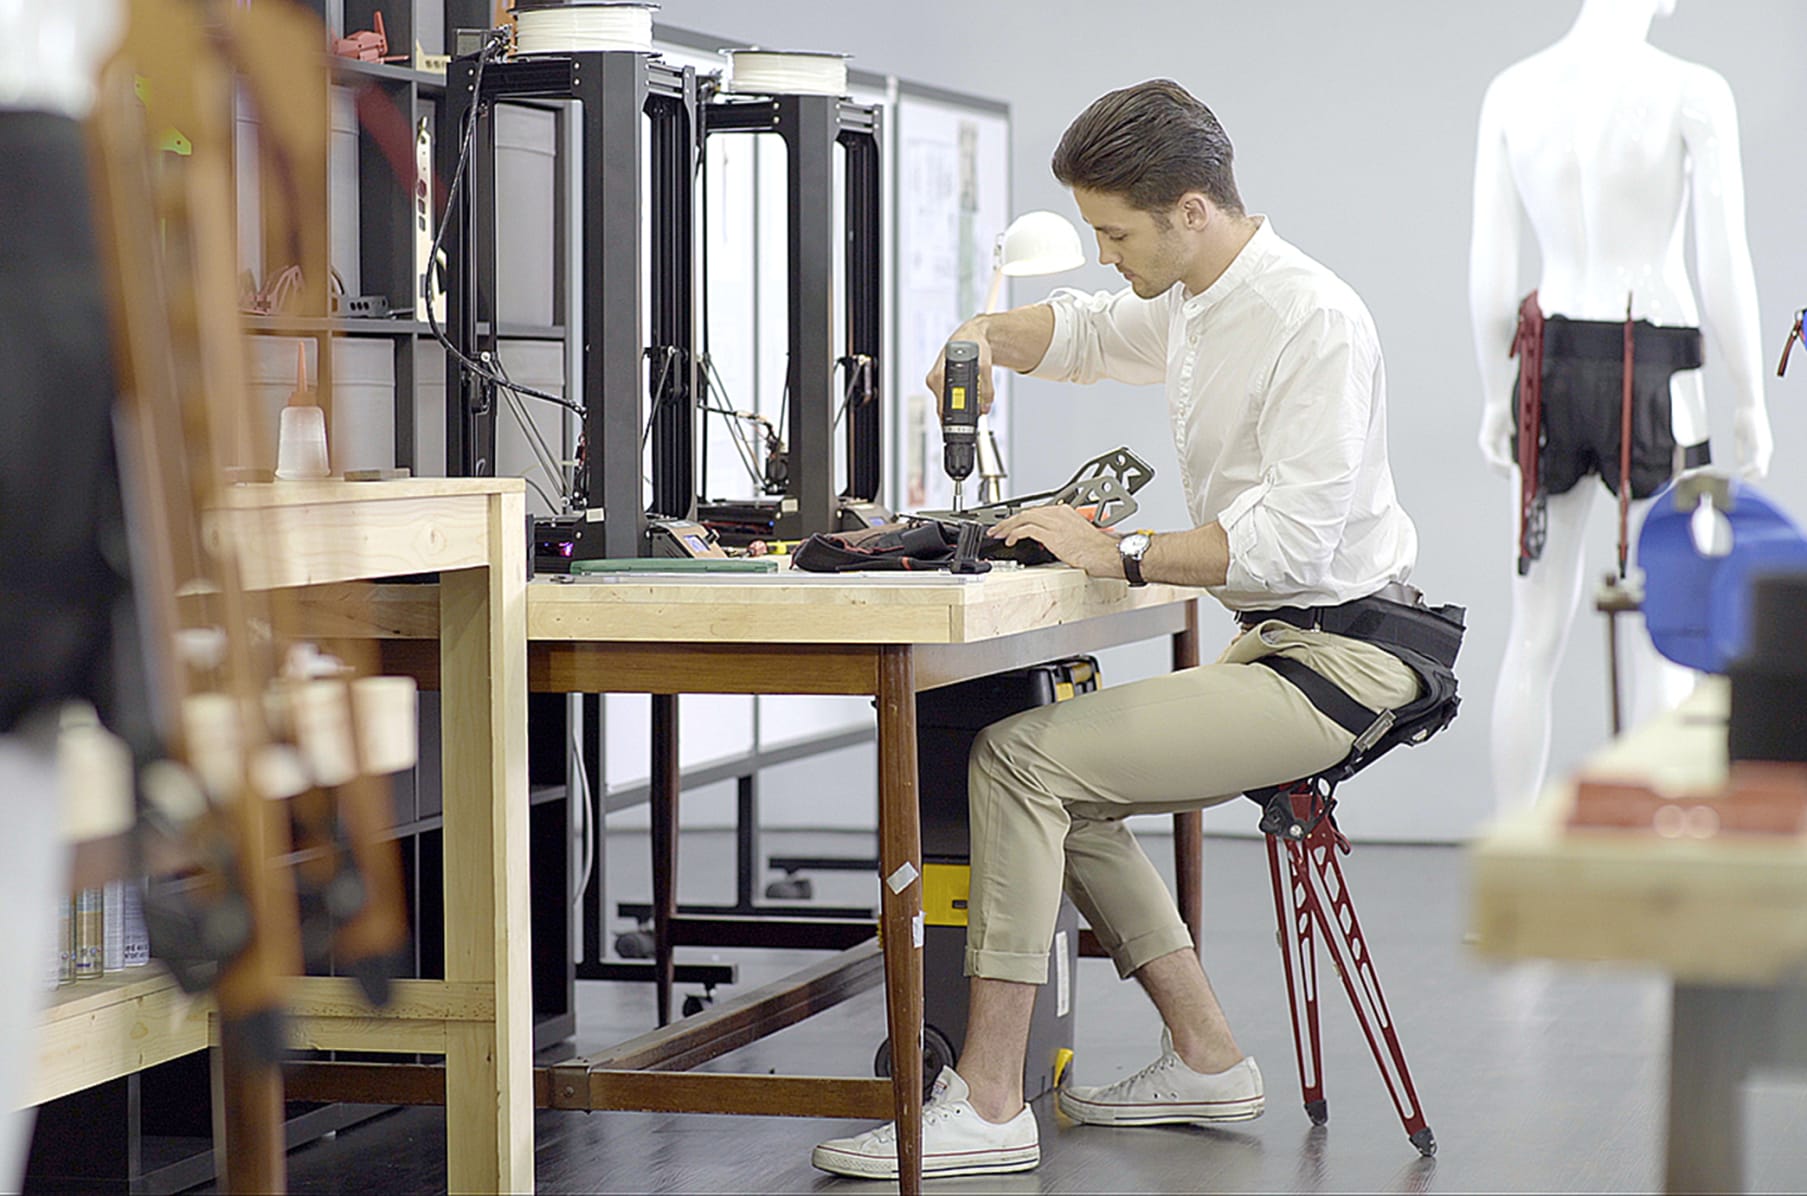 LEX:Bionic Chair that Enhance Posture,Comfort&Life | Indiegogo